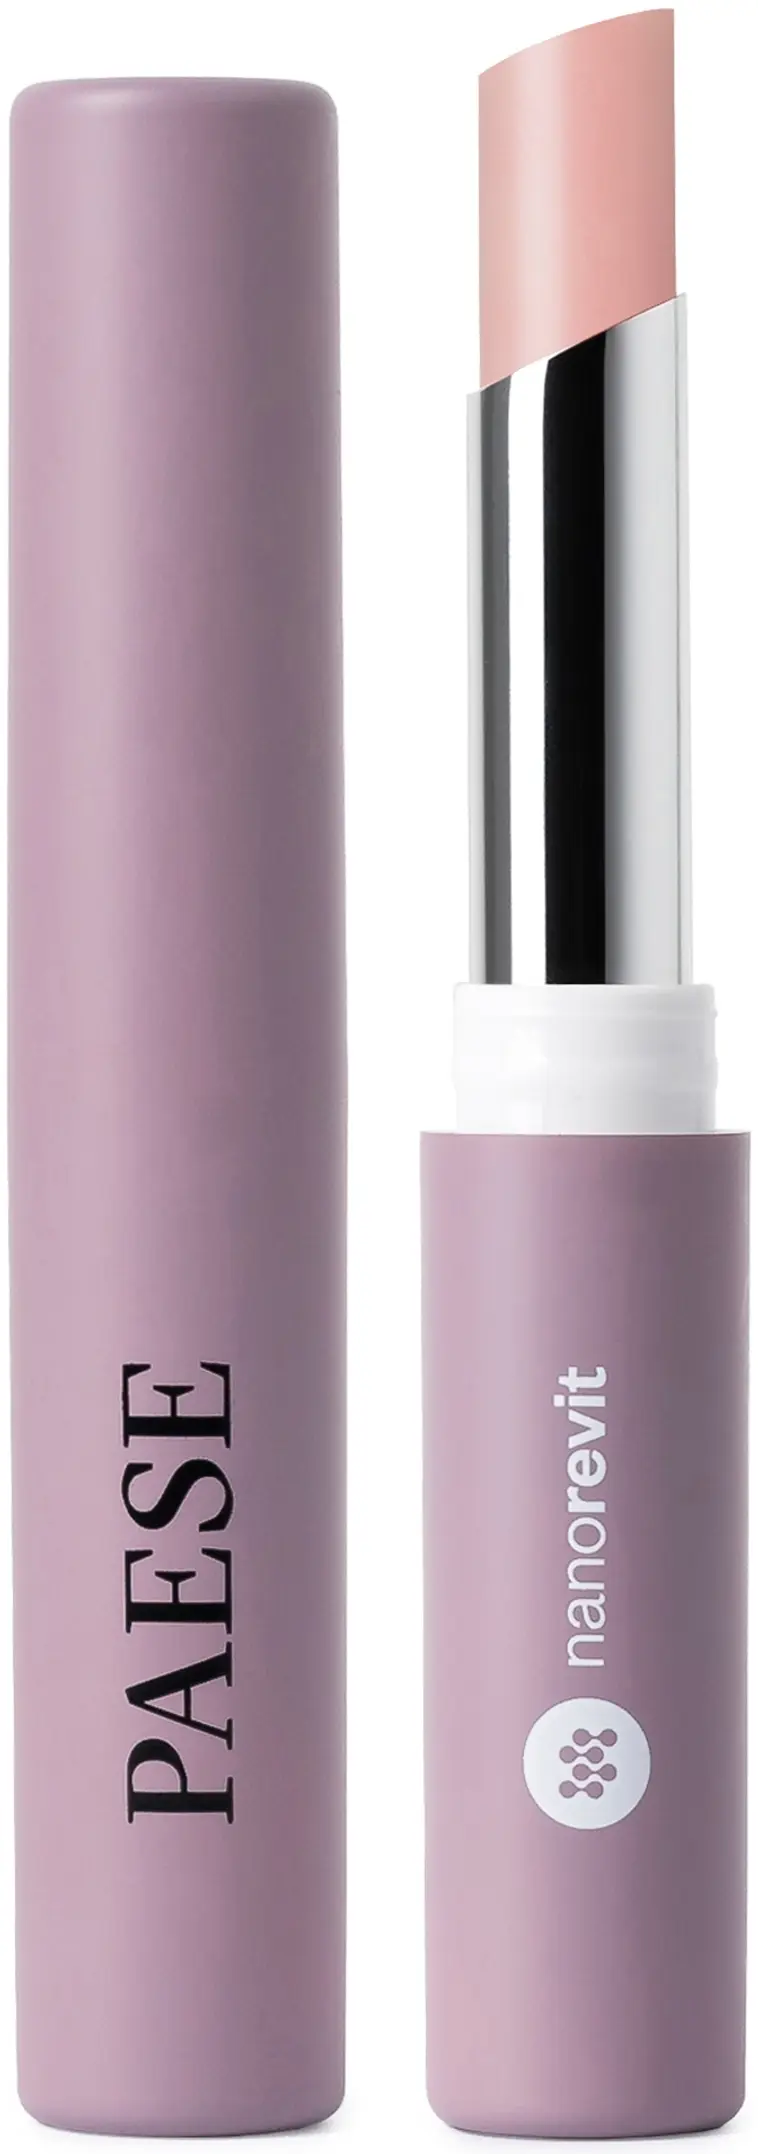 Paese Nanorevit lip care primer huultenpohjustus 40 light pink 2,2g